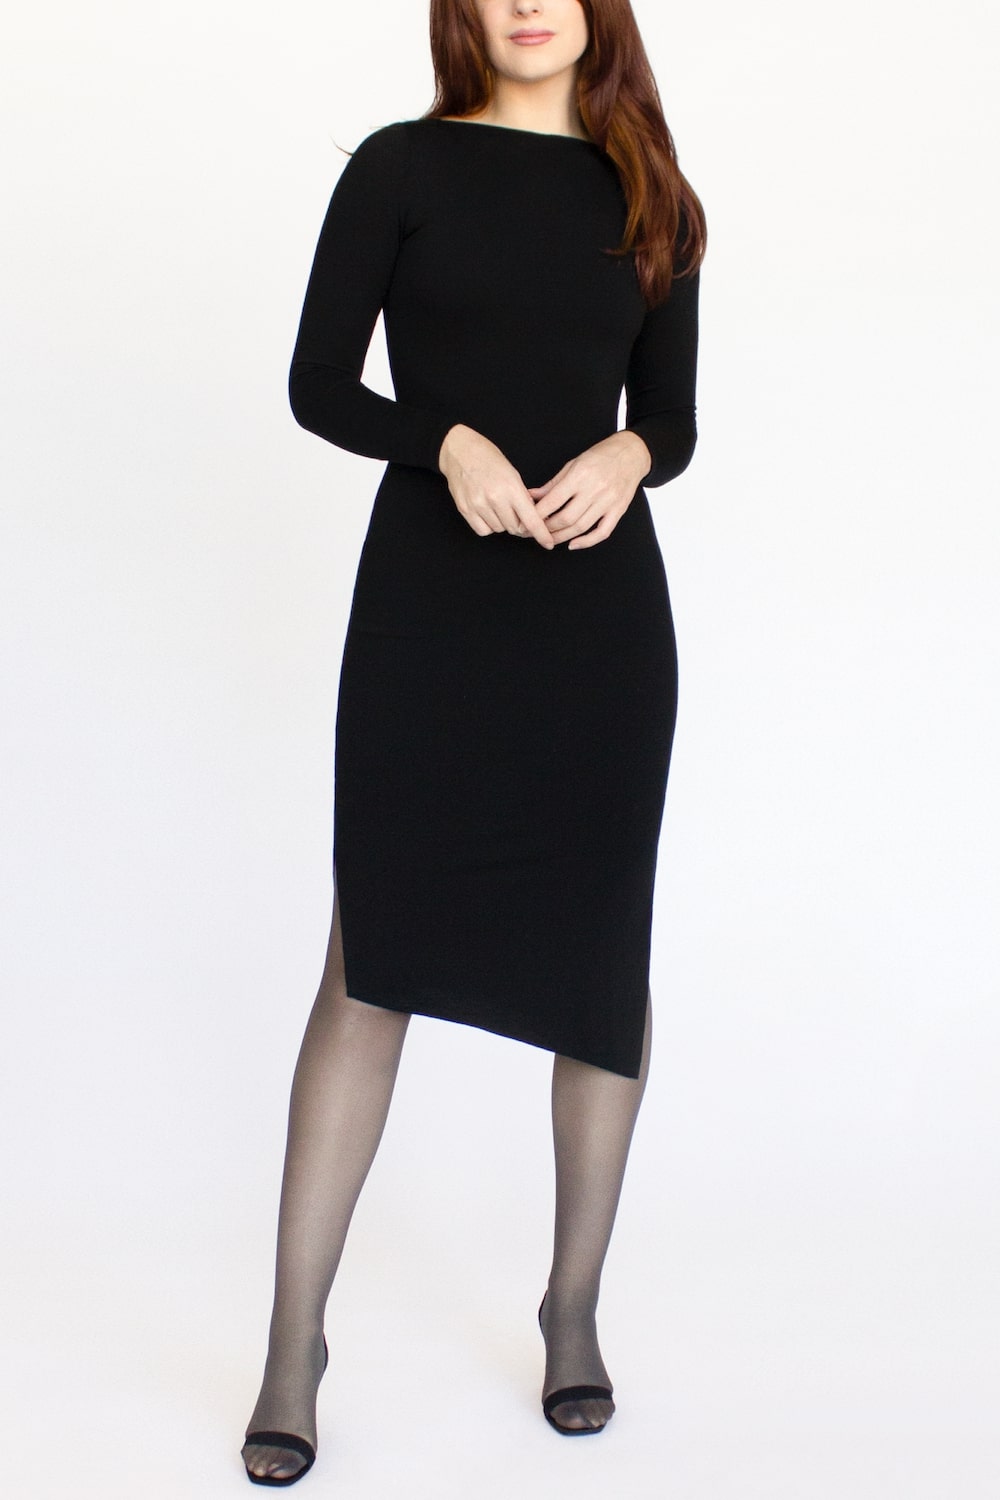 V-neck Pleated Knitted Long Sleeve Dress | Black bodycon dress long sleeve, Long  sleeve bodycon dress, Bodycon dress